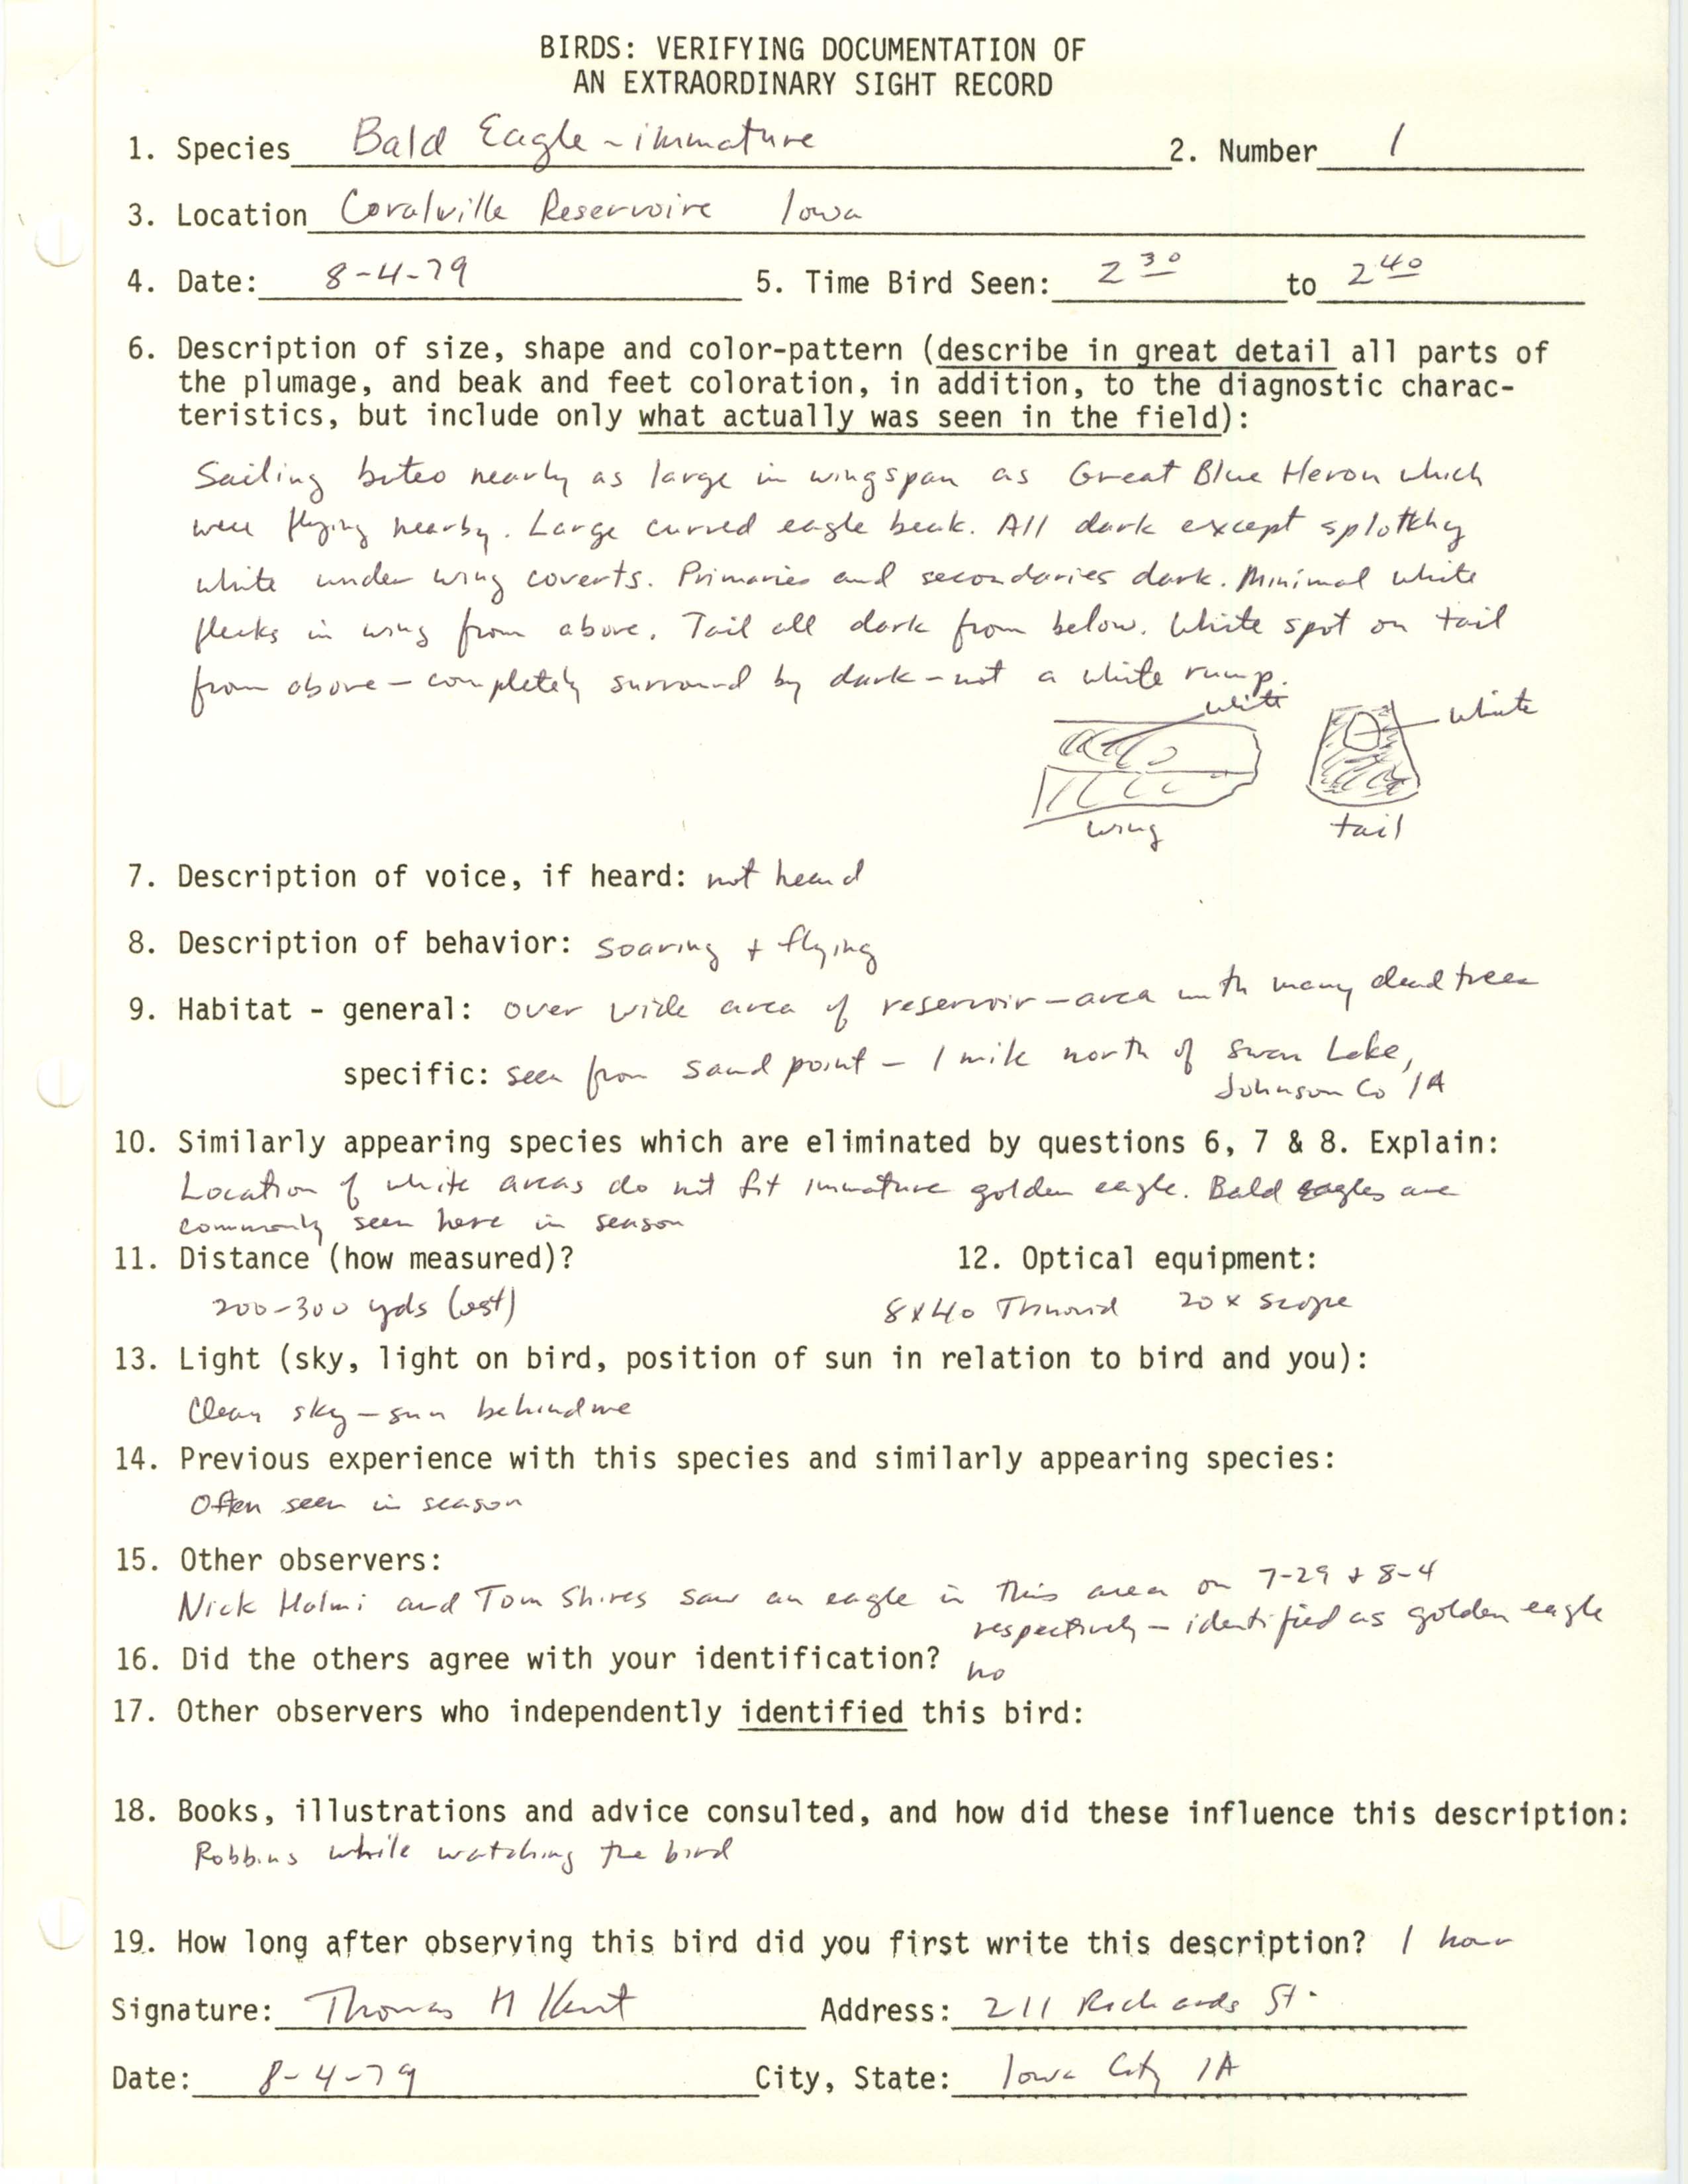 Rare bird documentation form for Bald Eagle at Coralville Reservoir, 1979